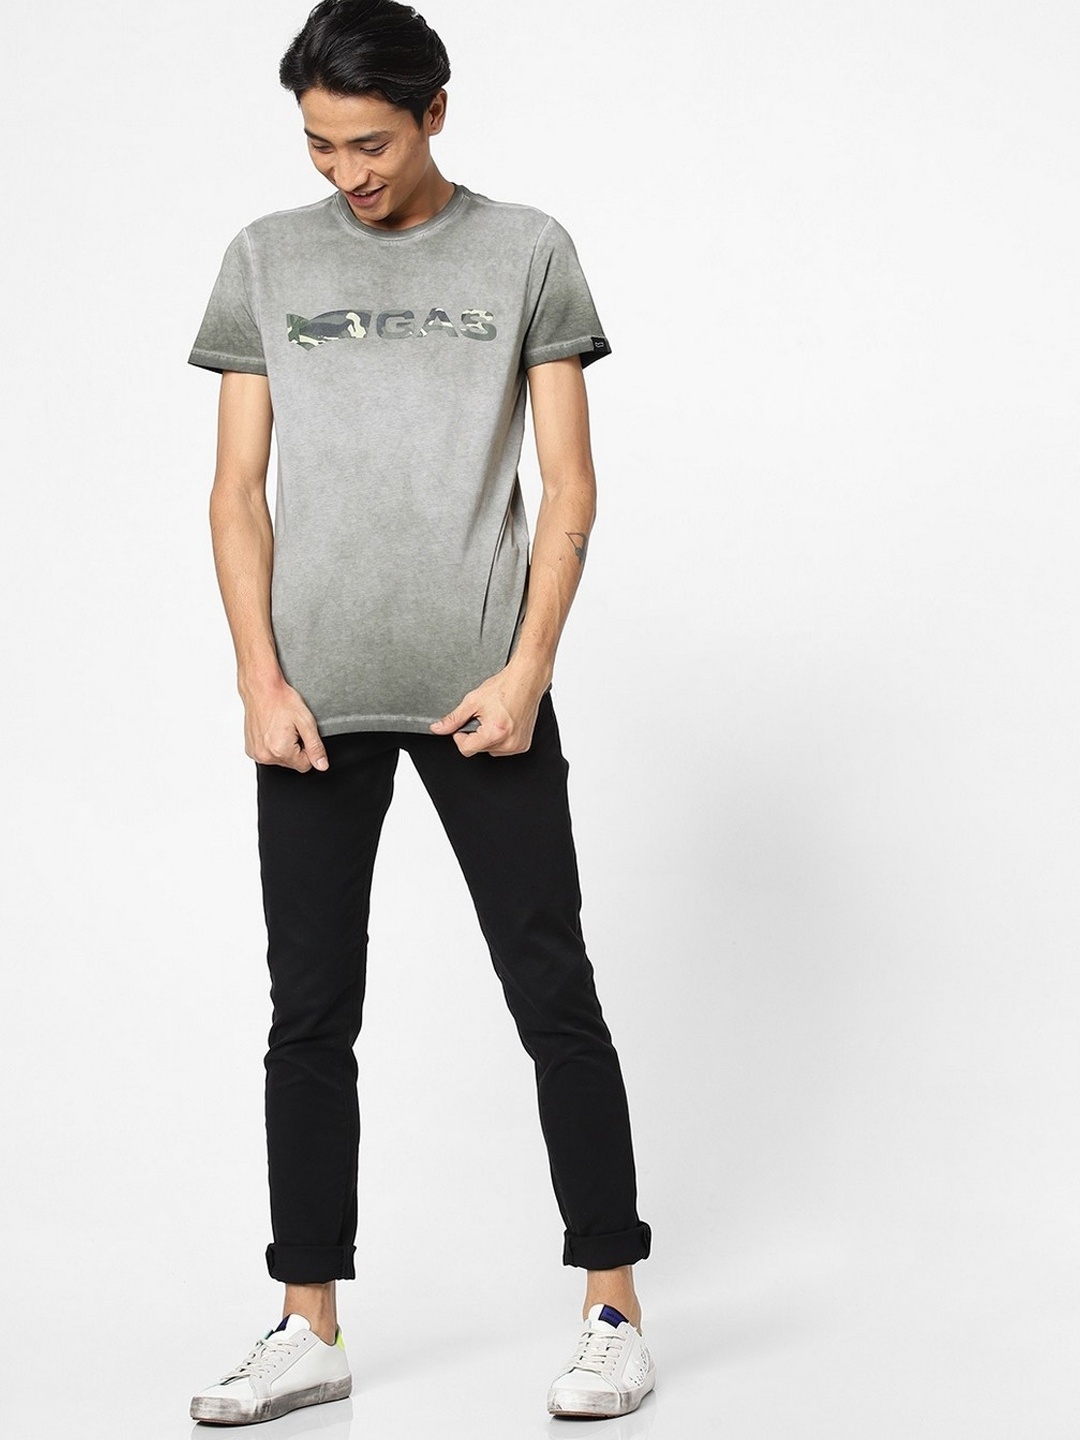 Scuba Camo Crew-Neck T-shirt with Branding